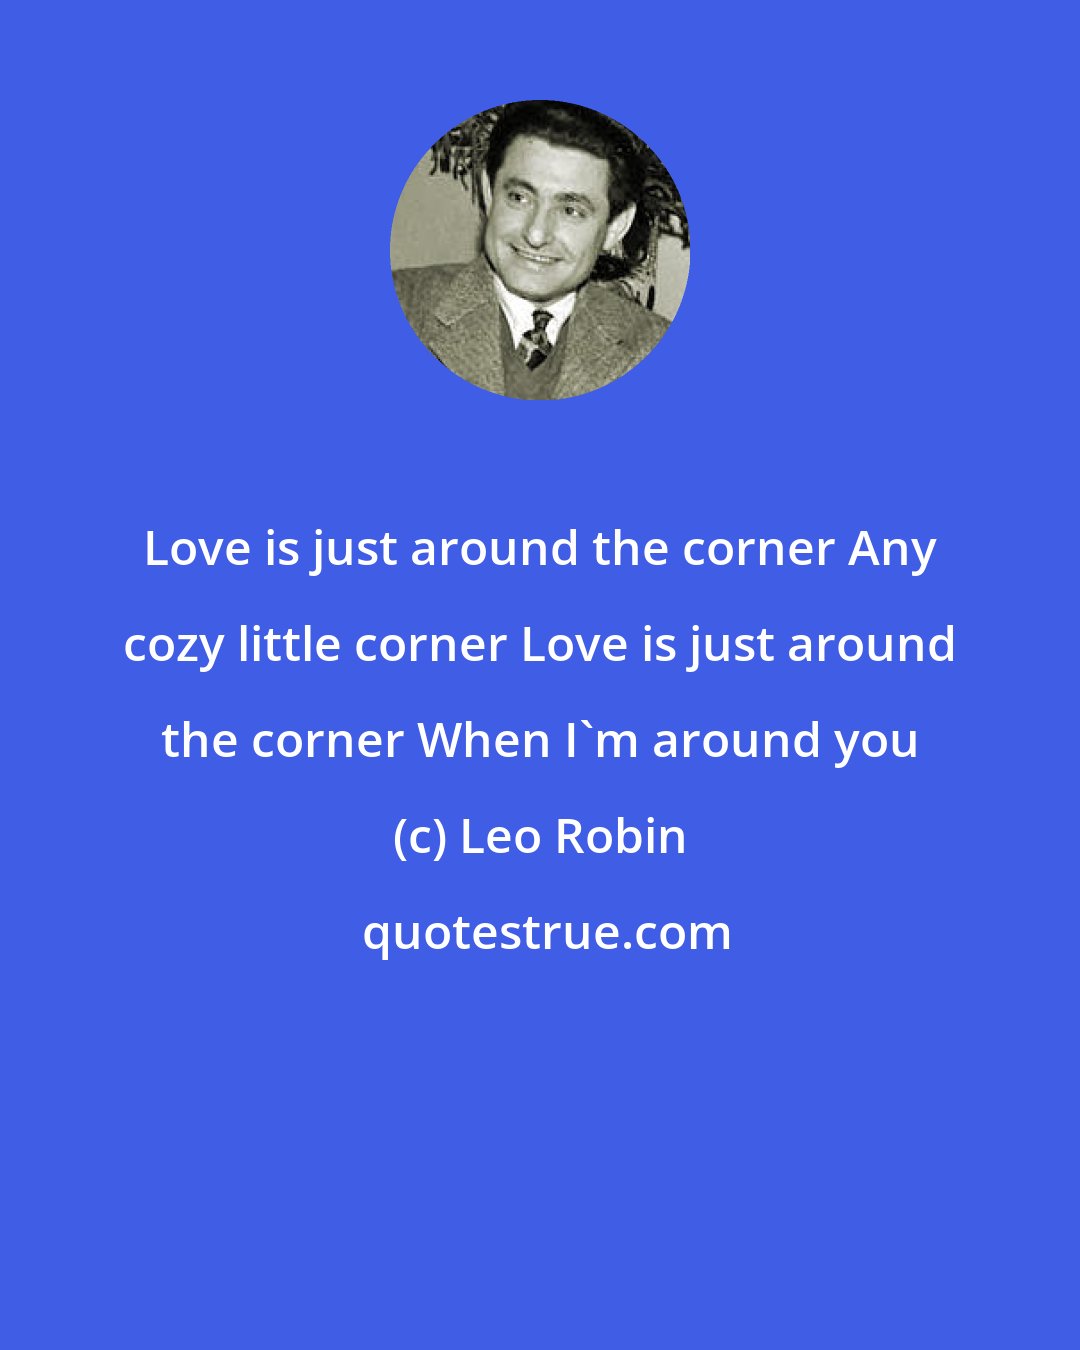 Leo Robin: Love is just around the corner Any cozy little corner Love is just around the corner When I'm around you